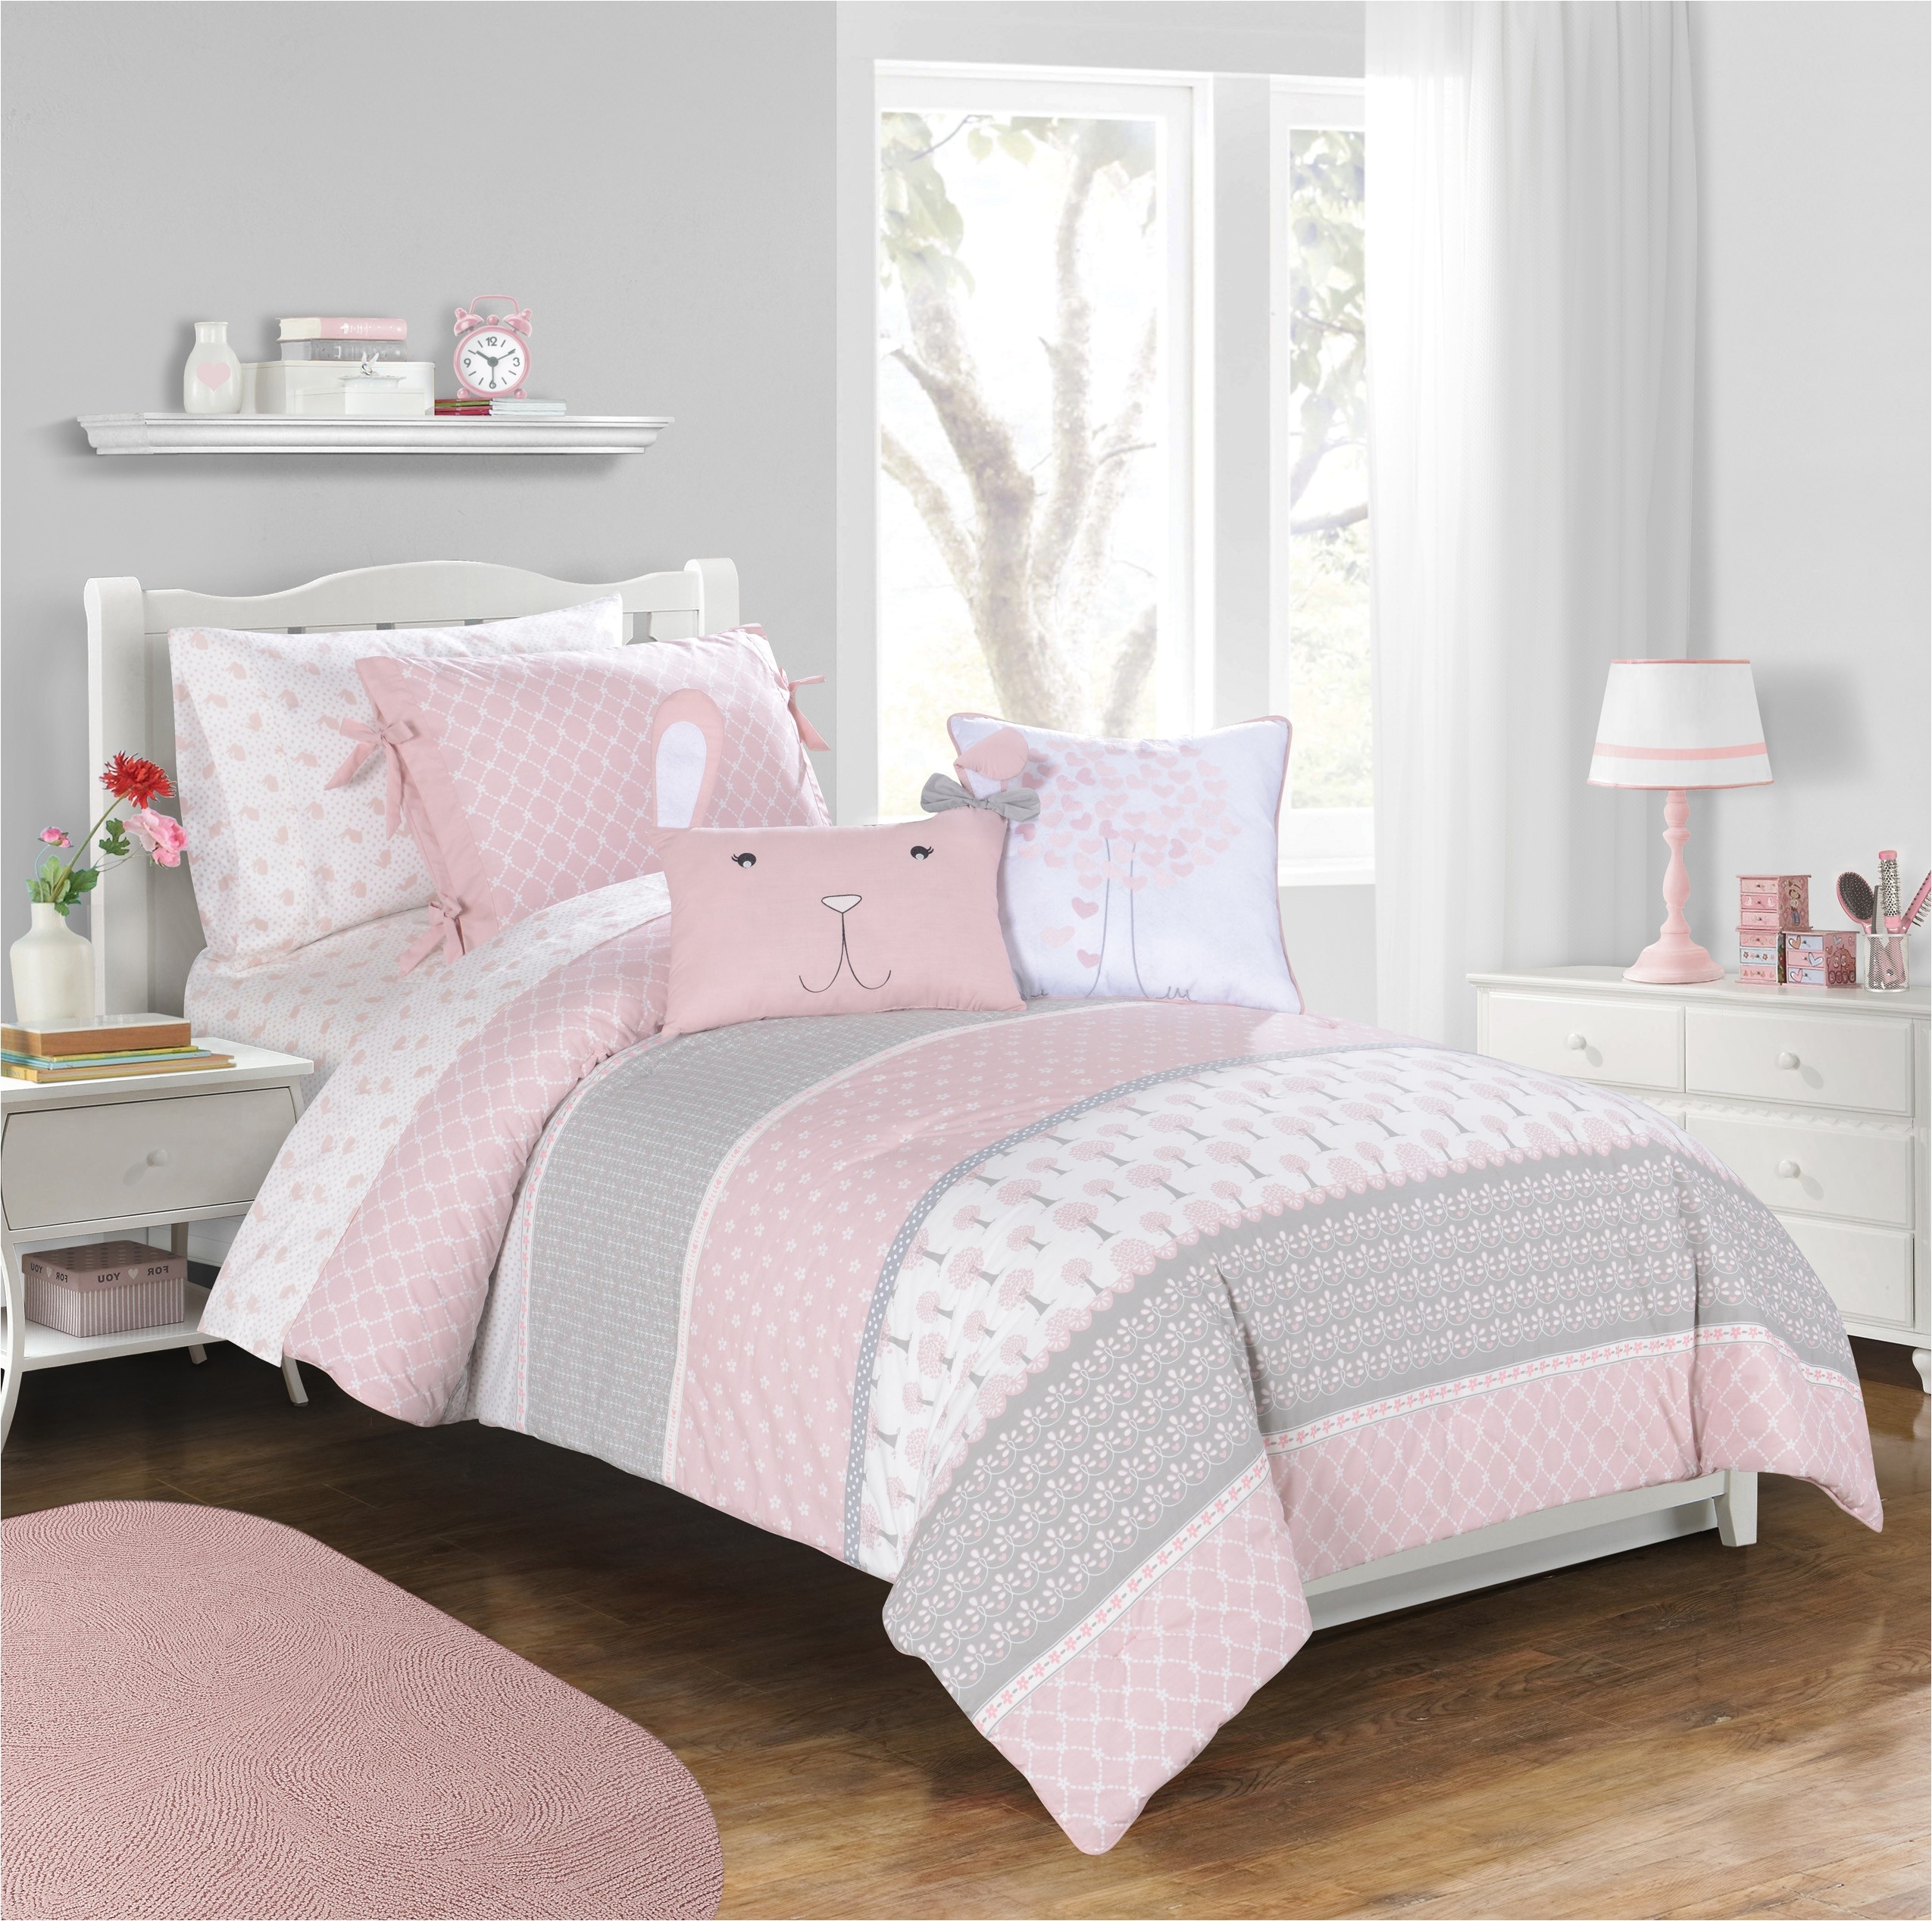 full size of home design macys bed comforters inspirational bedroom pink bedroom furniture for ebay large size of home design macys bed comforters